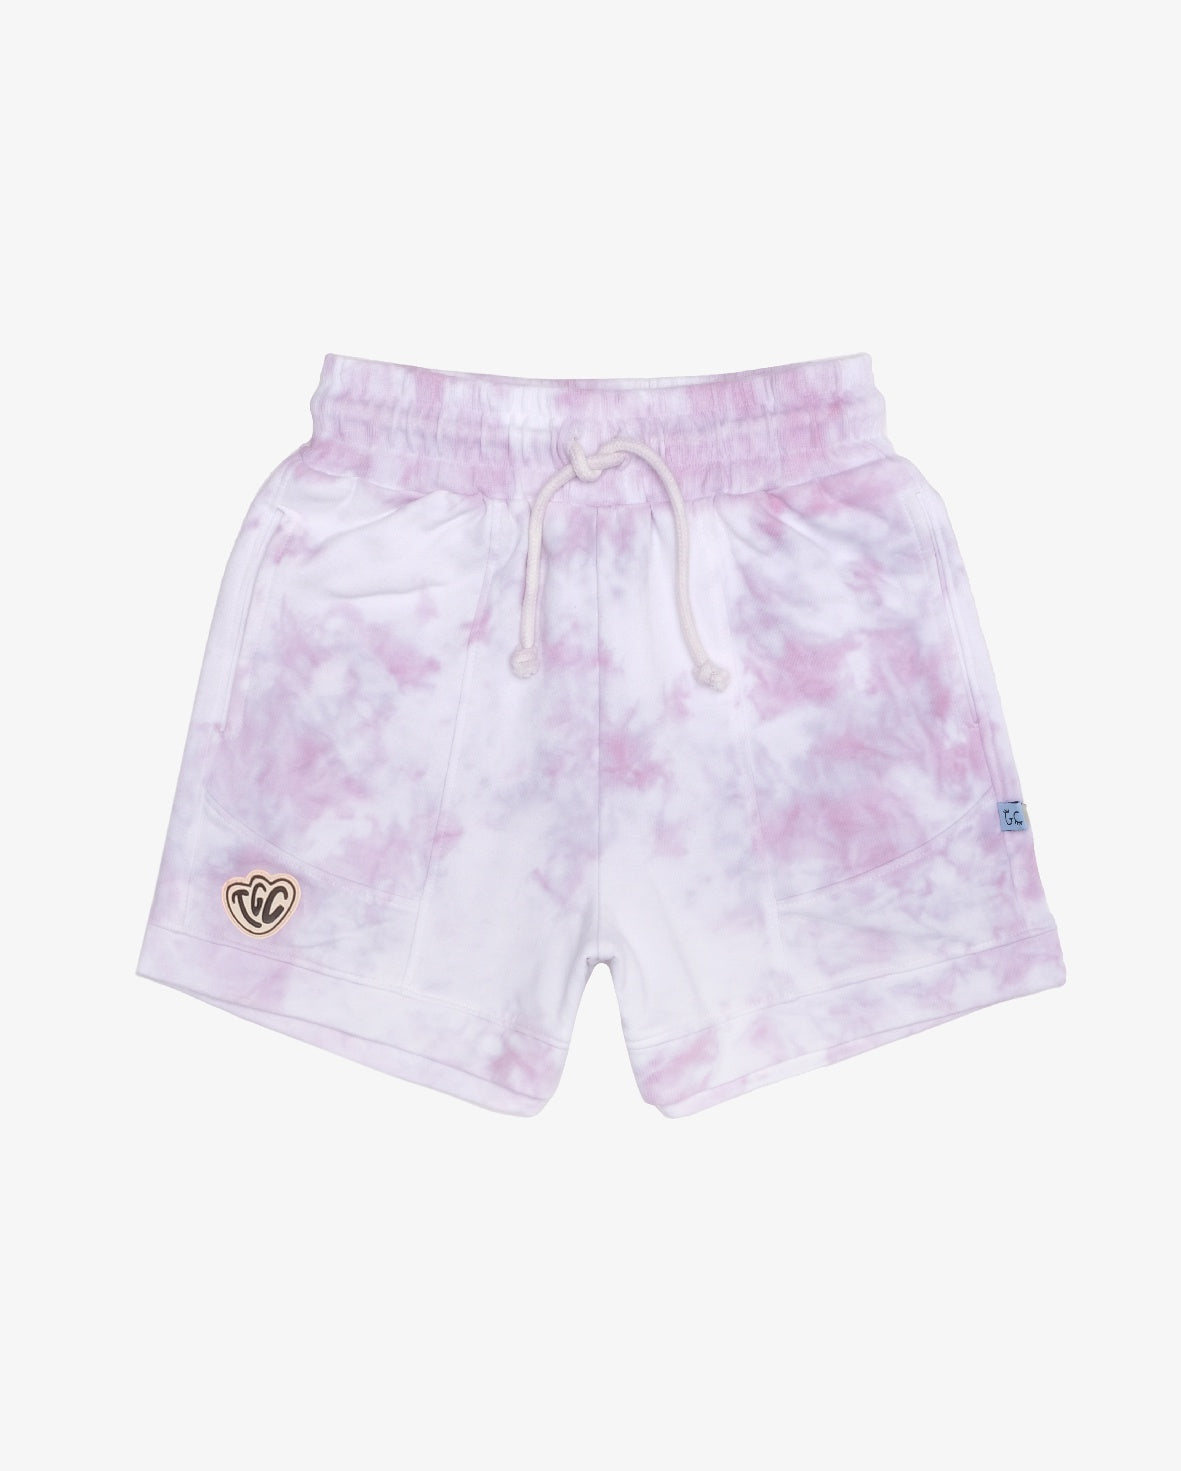 The Girl Club - Lilac Tie-Dye Panel Shorts